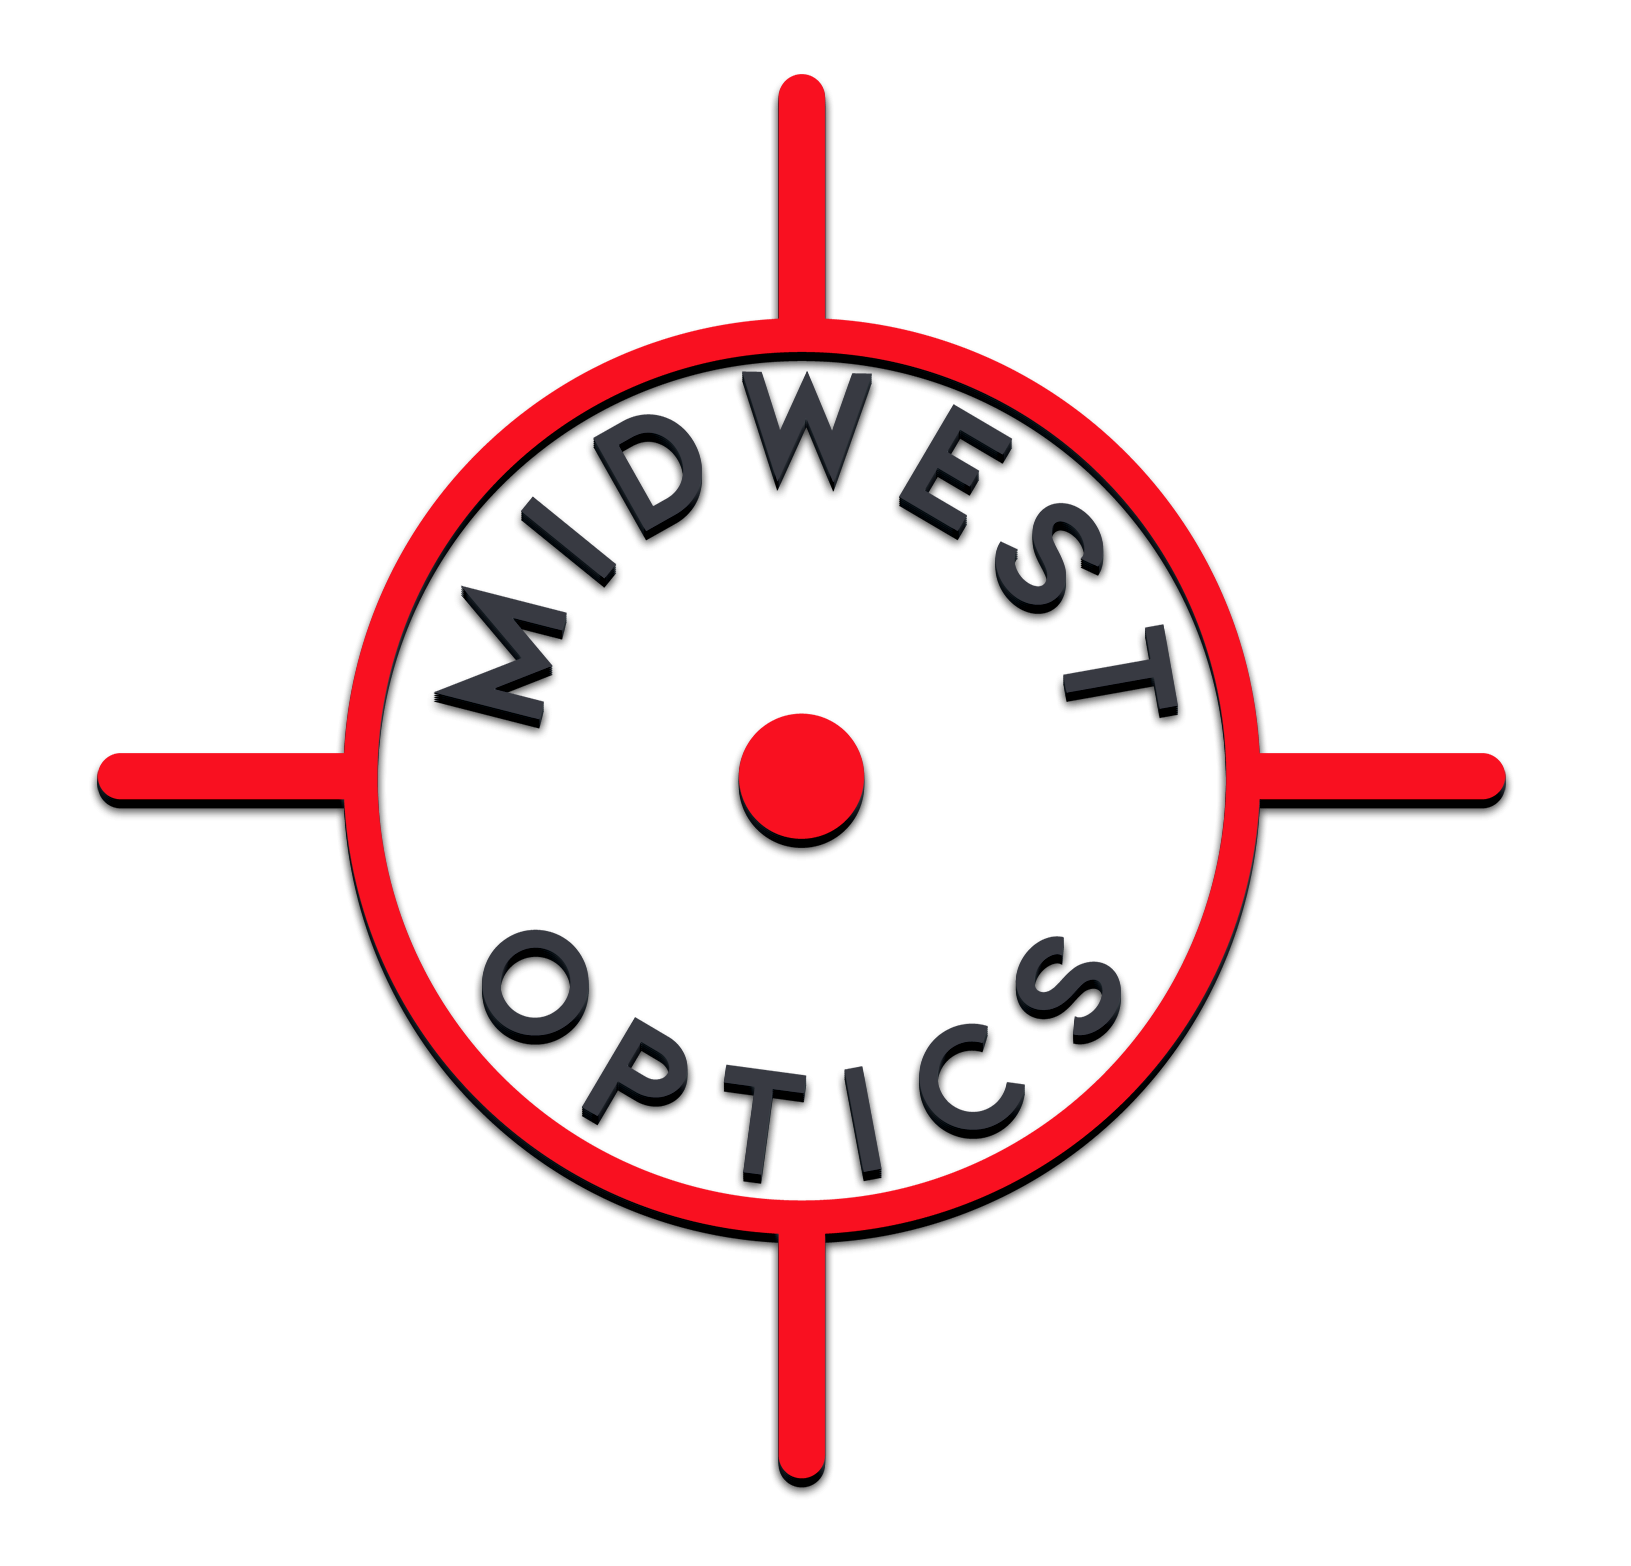 Midwest Optics